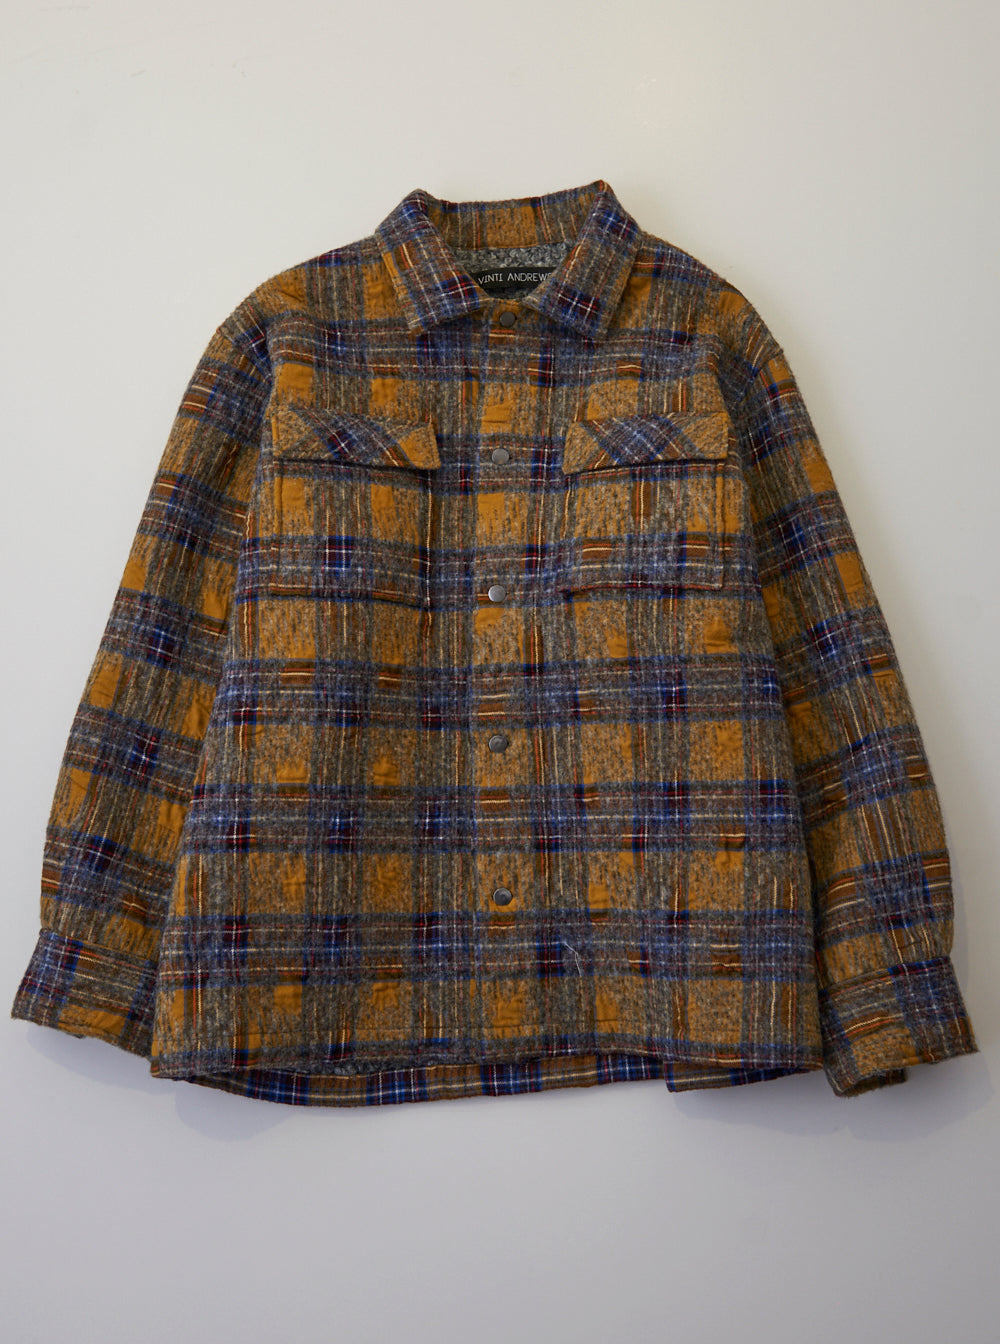 Vinti Andrews Shirt Jacket Wool Plaid